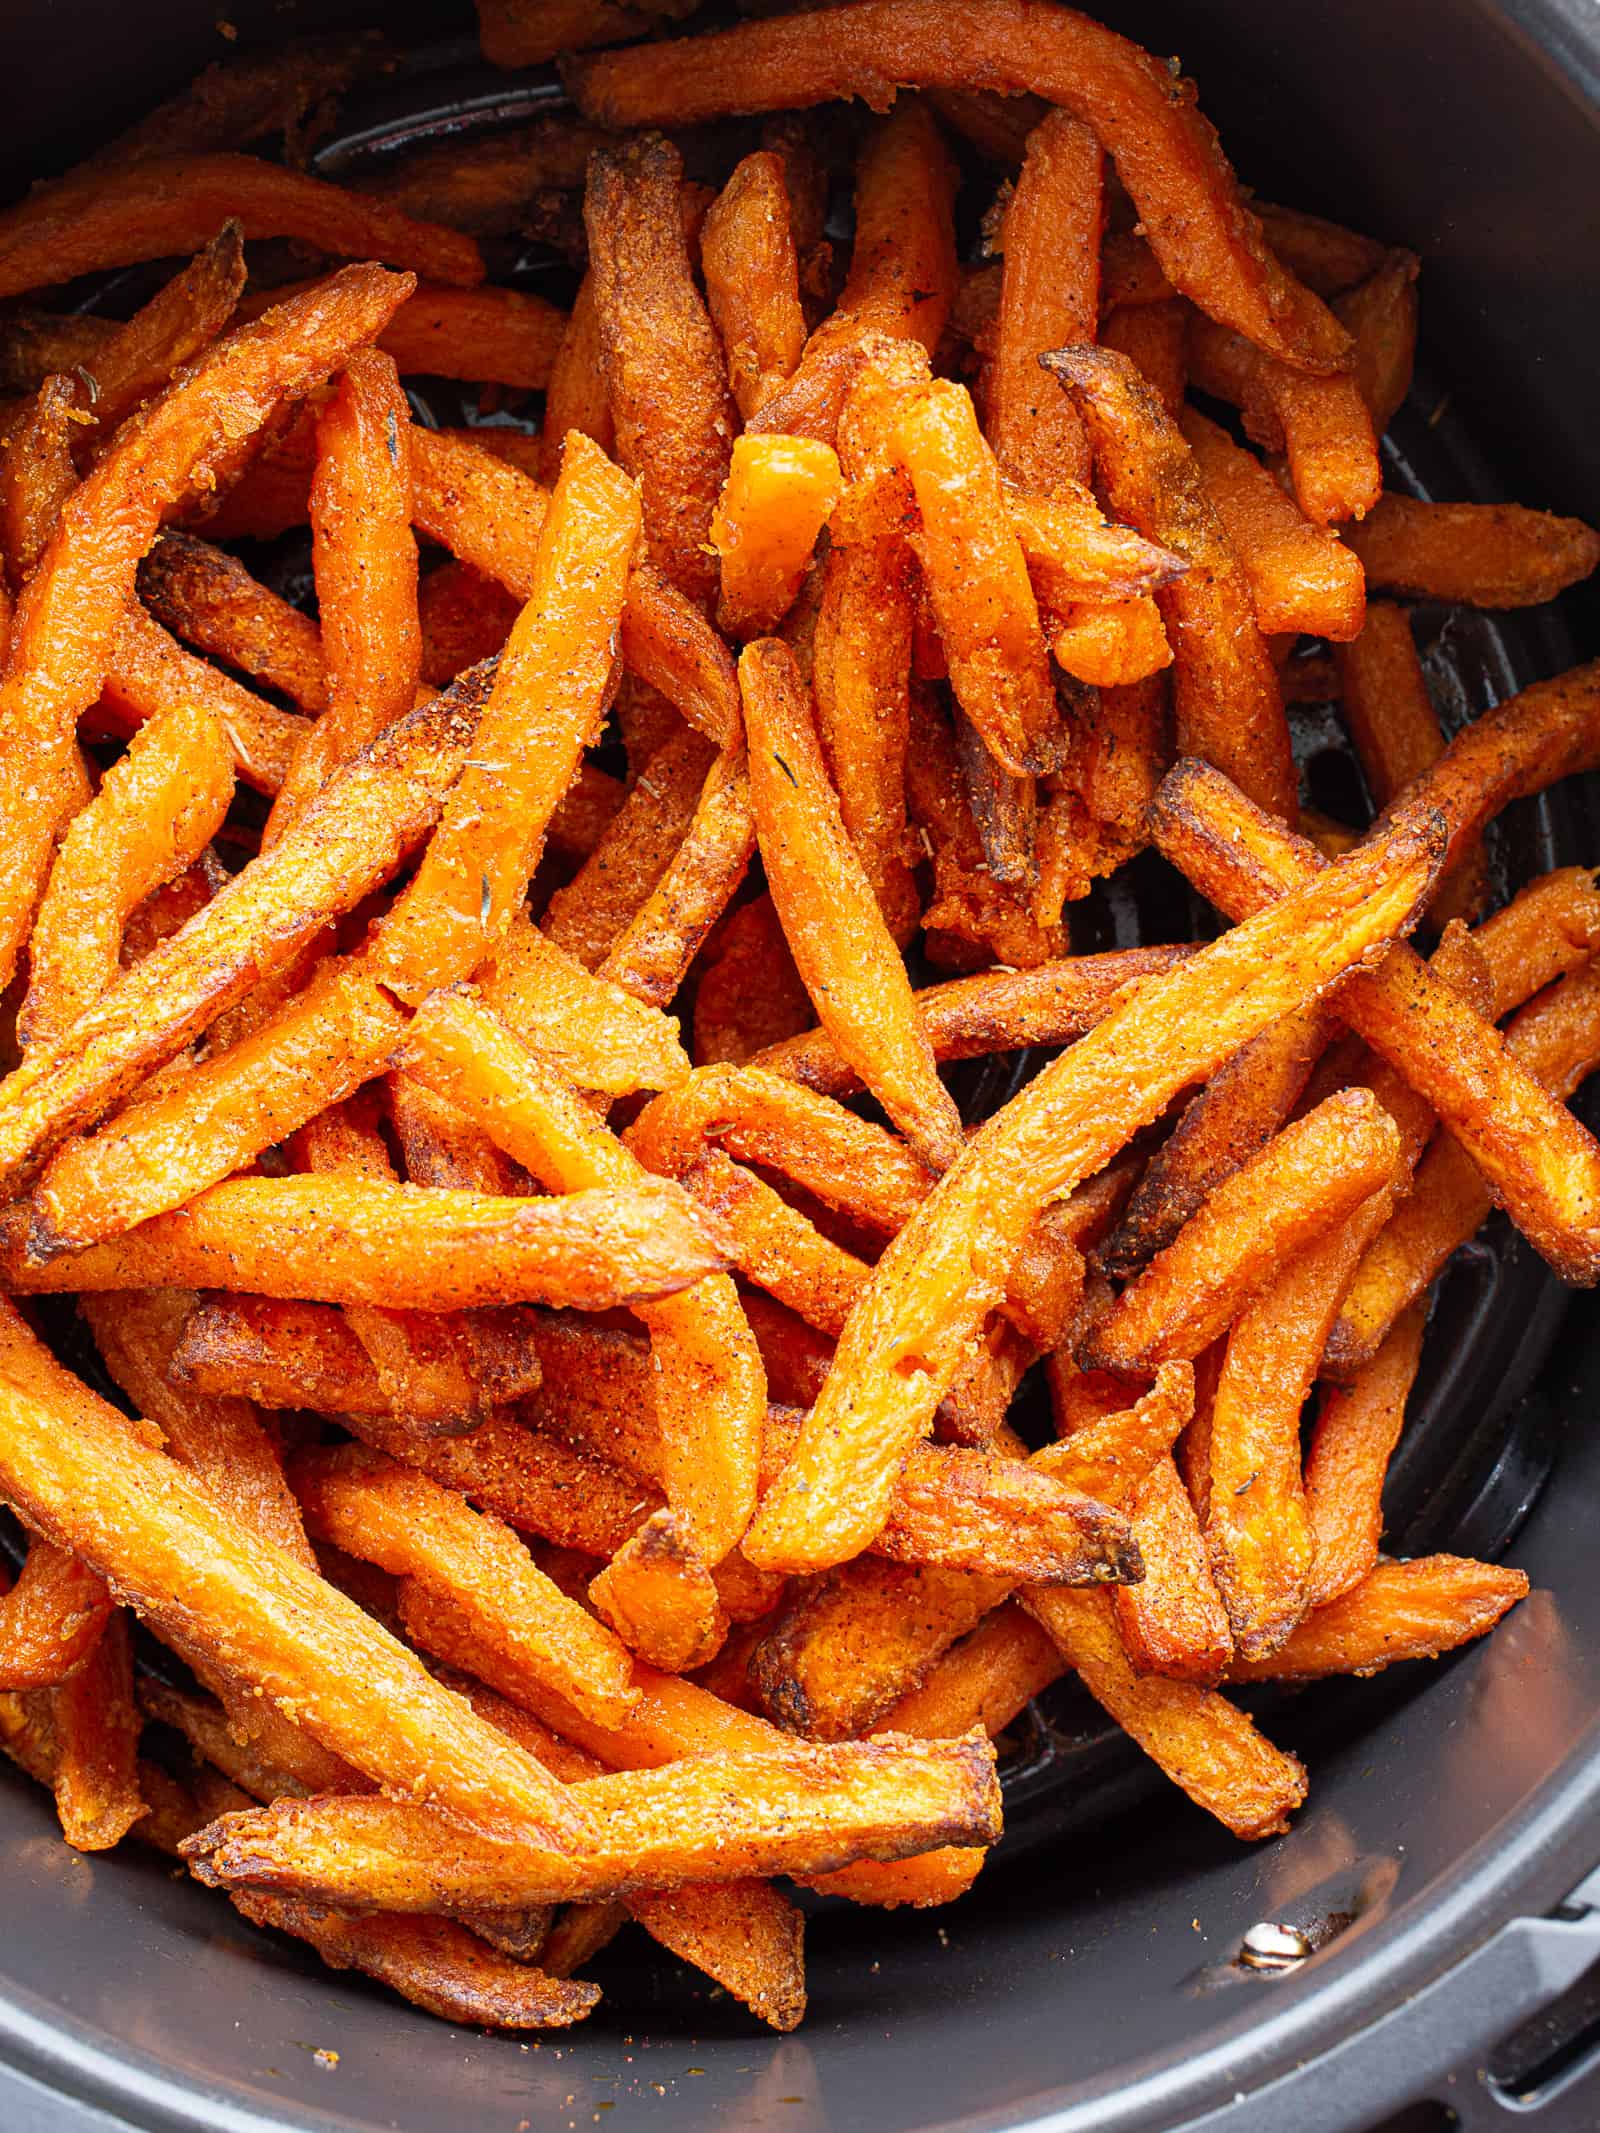 Cooked frozen sweet potato fries in an air fryer basket.